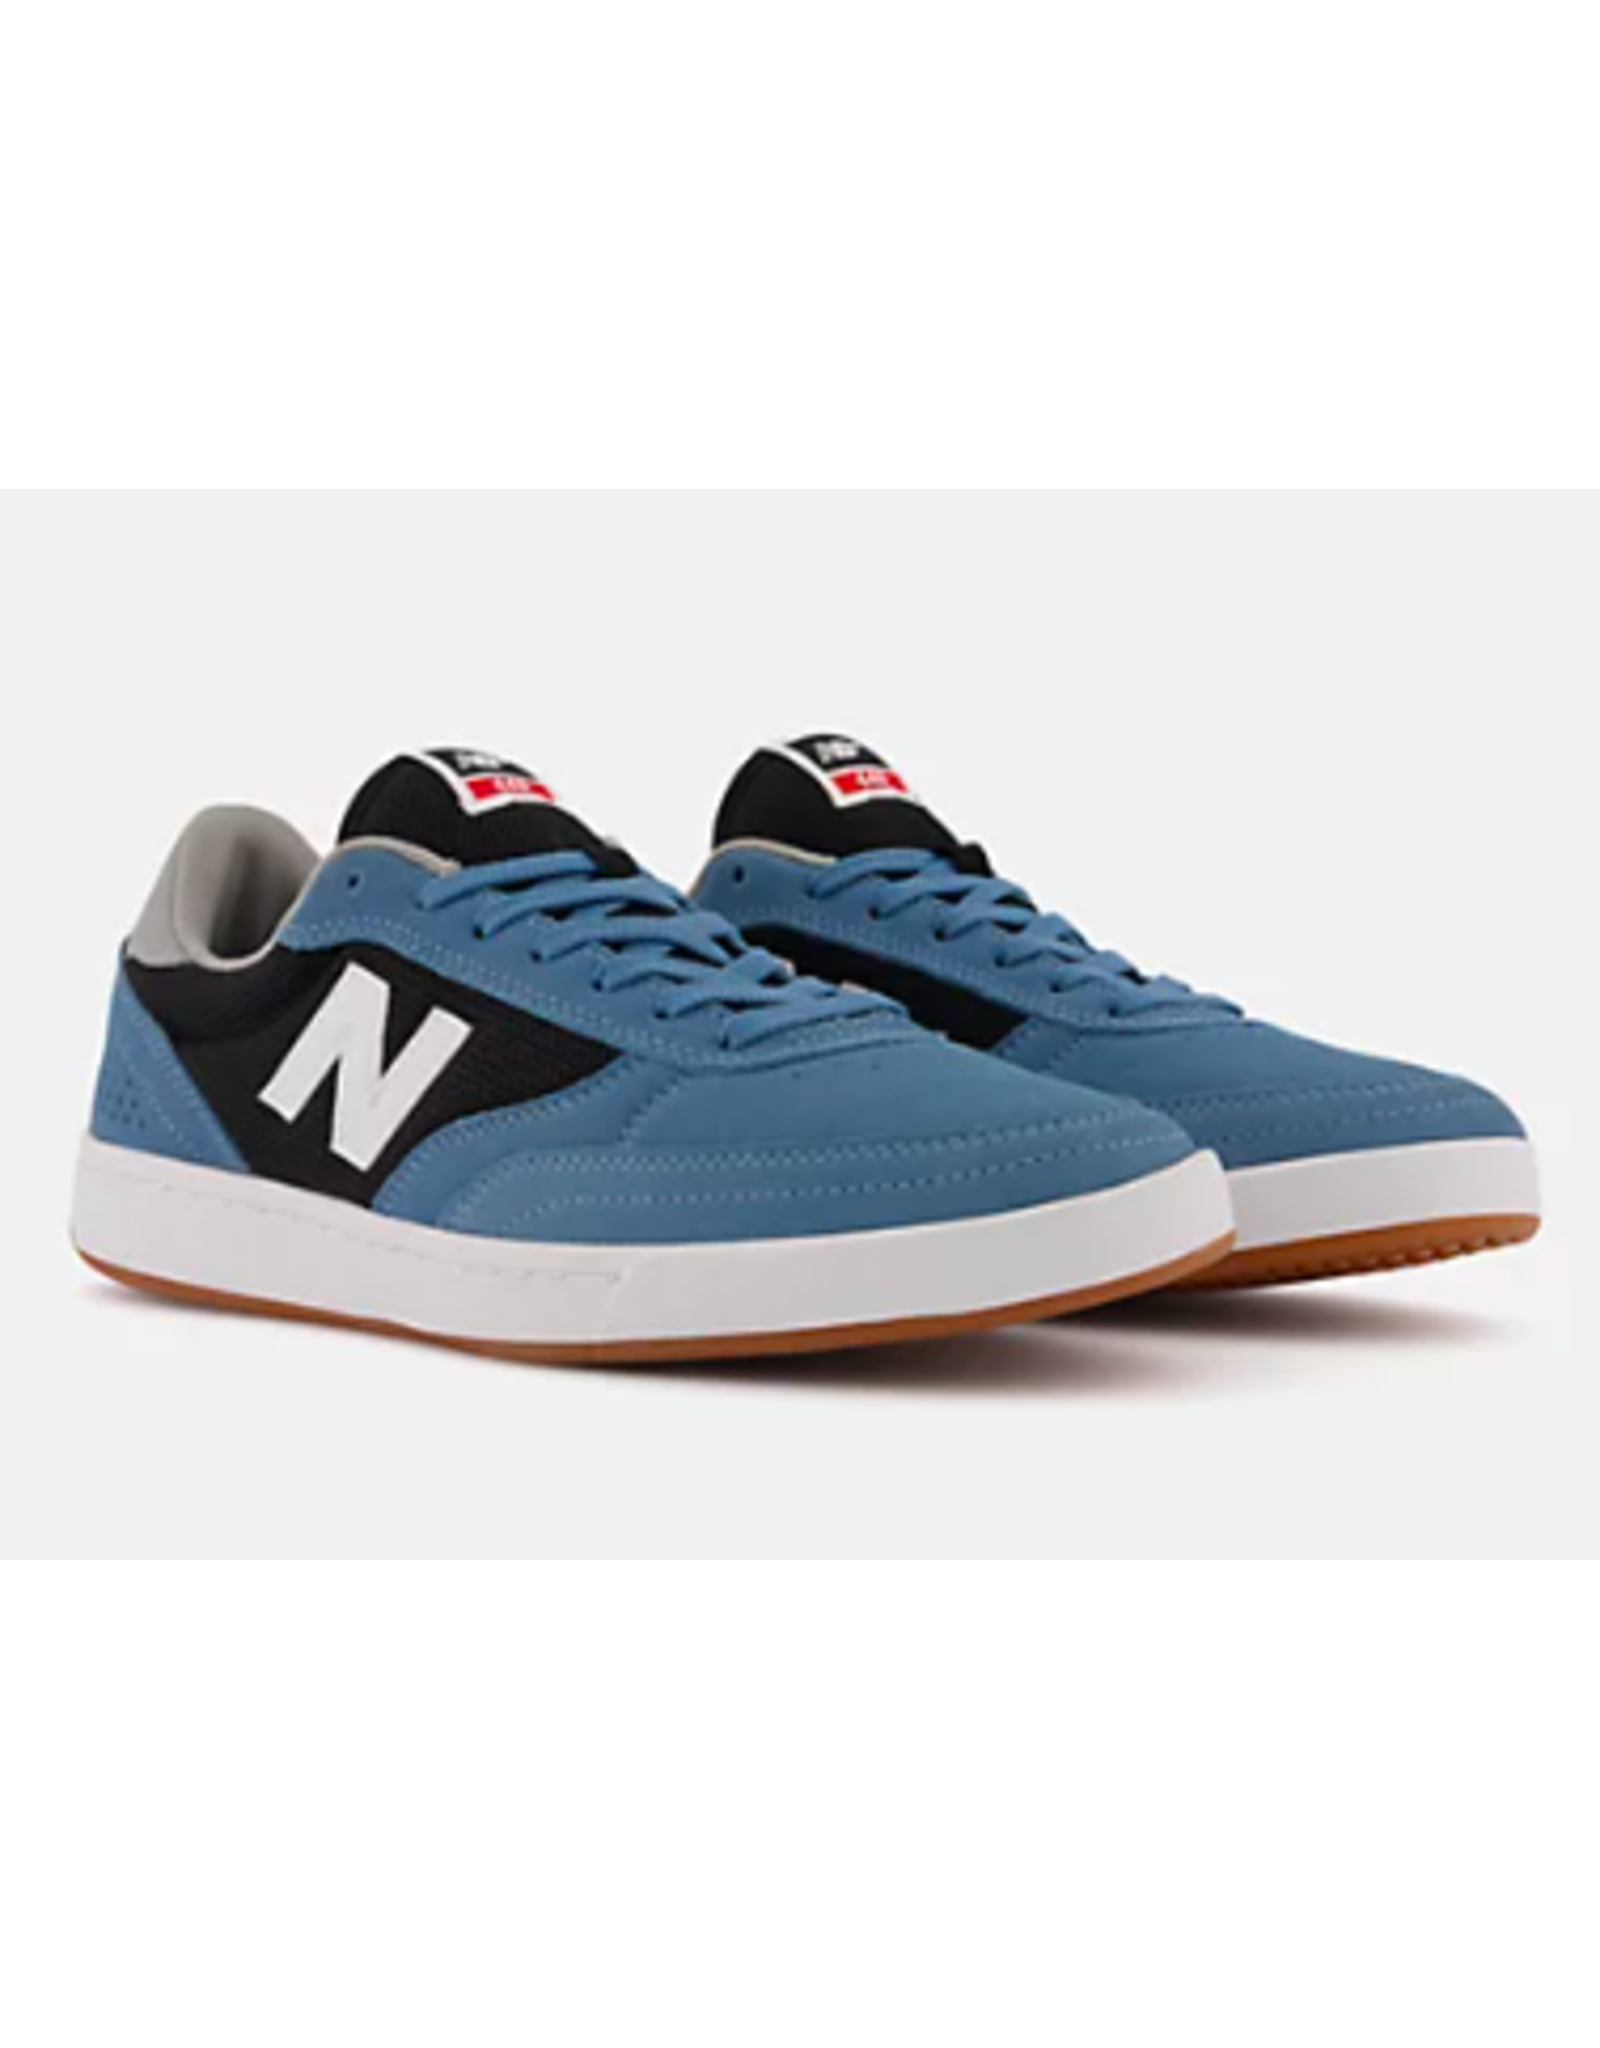 New Balance Men's Numeric 440 Shoes Blue with Black